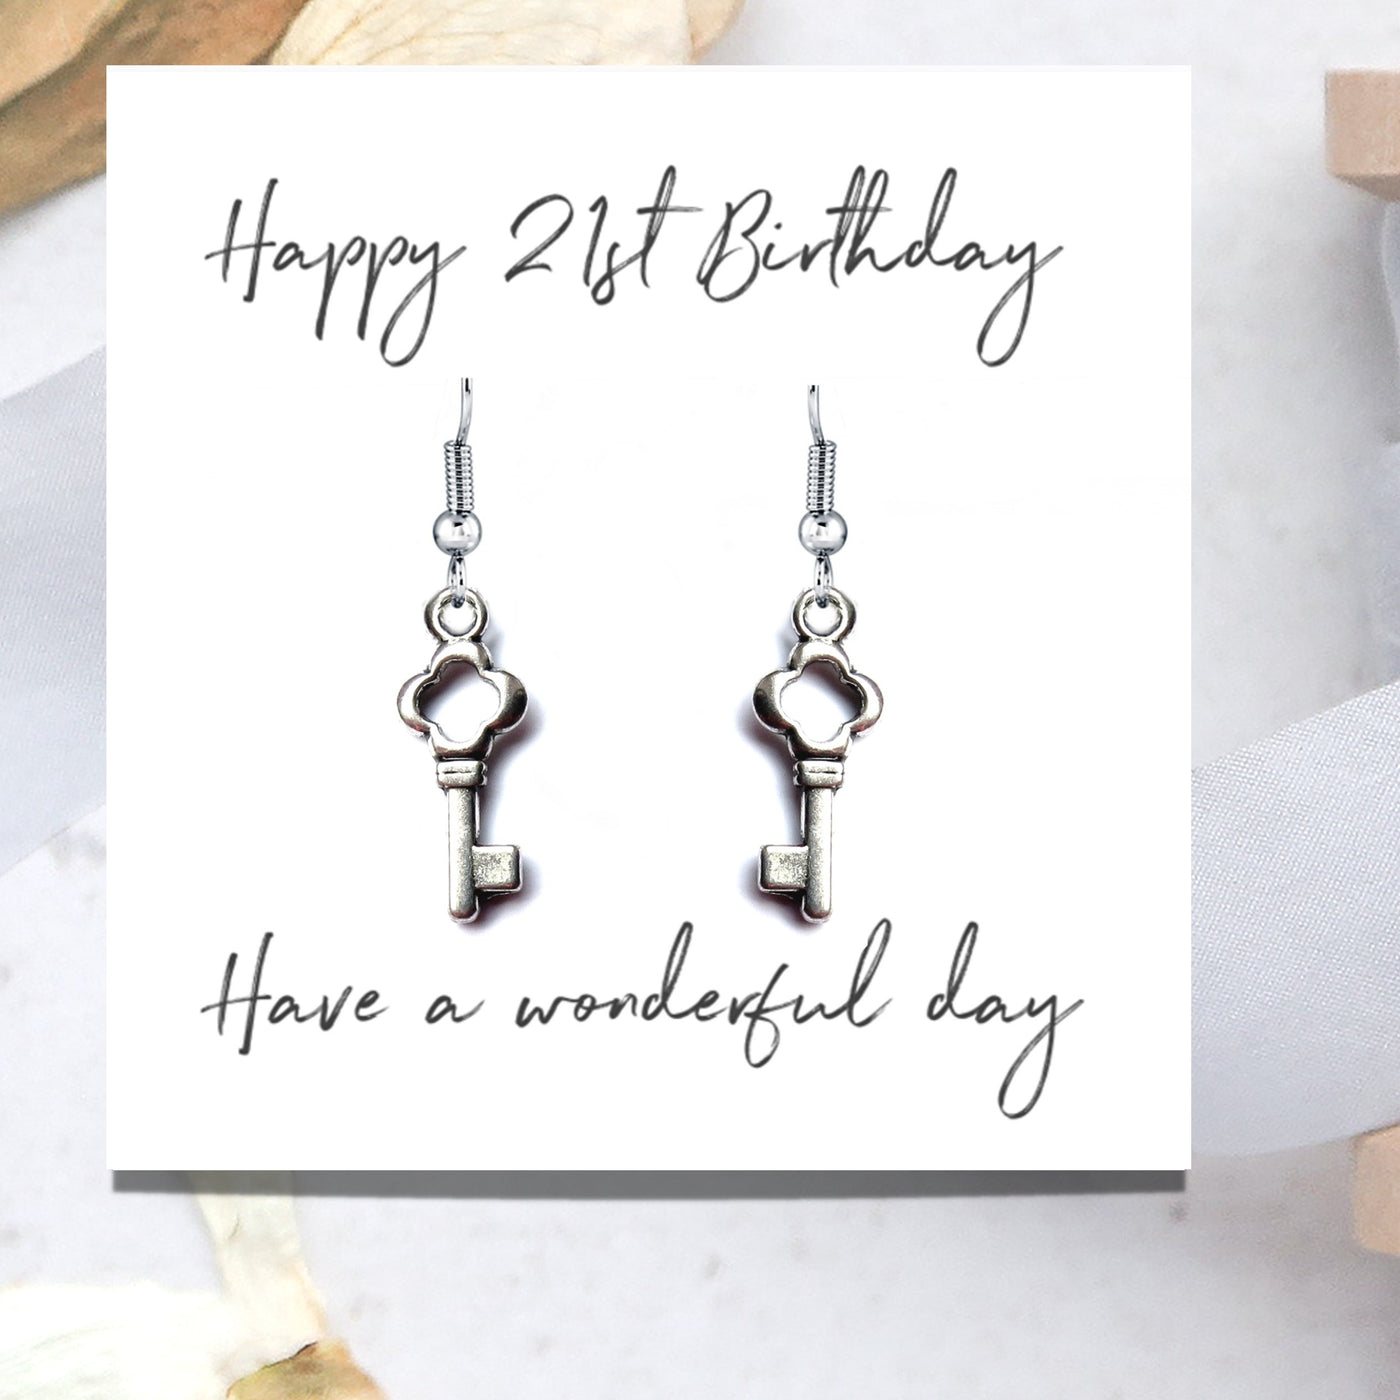 Happy 21st Birthday Earrings & Message Card